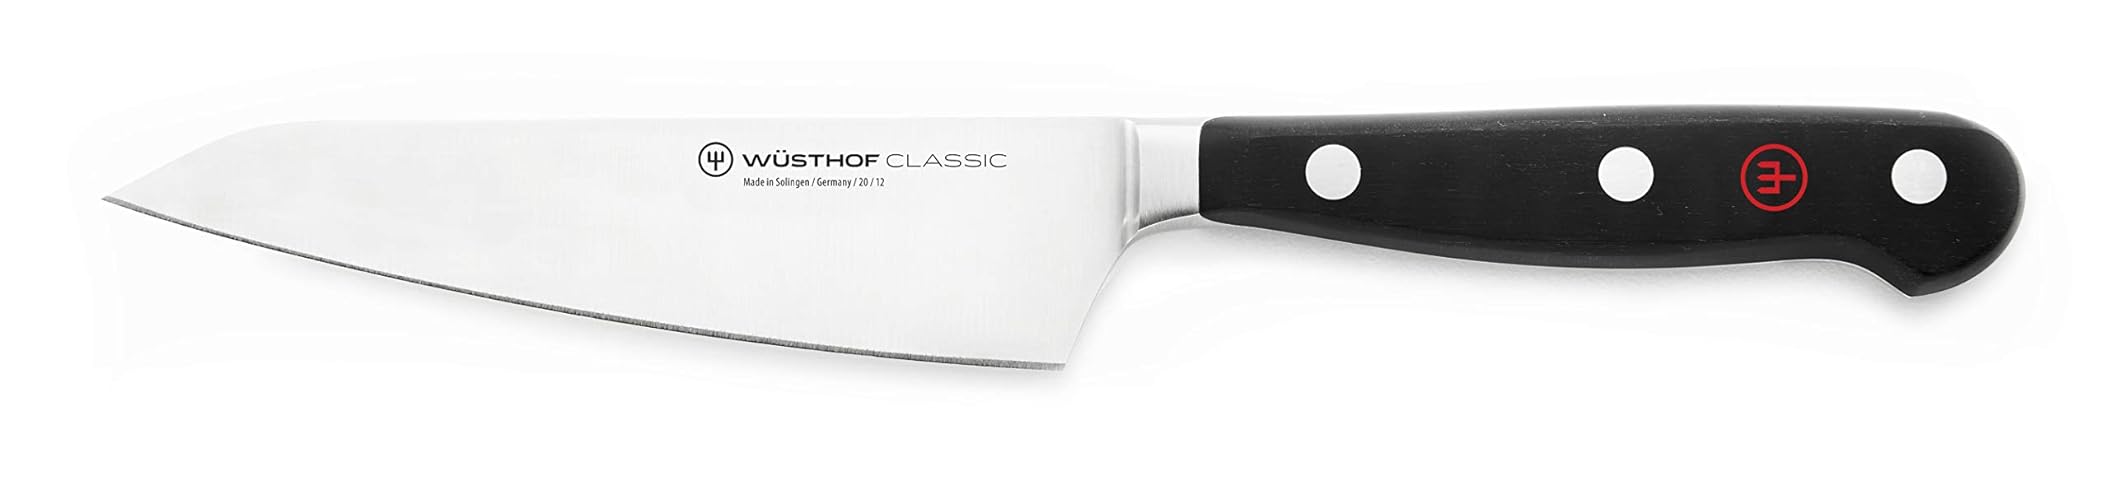 $69.00: WÜSTHOF Classic 5" Utility Knife, Black, Stainless Steel